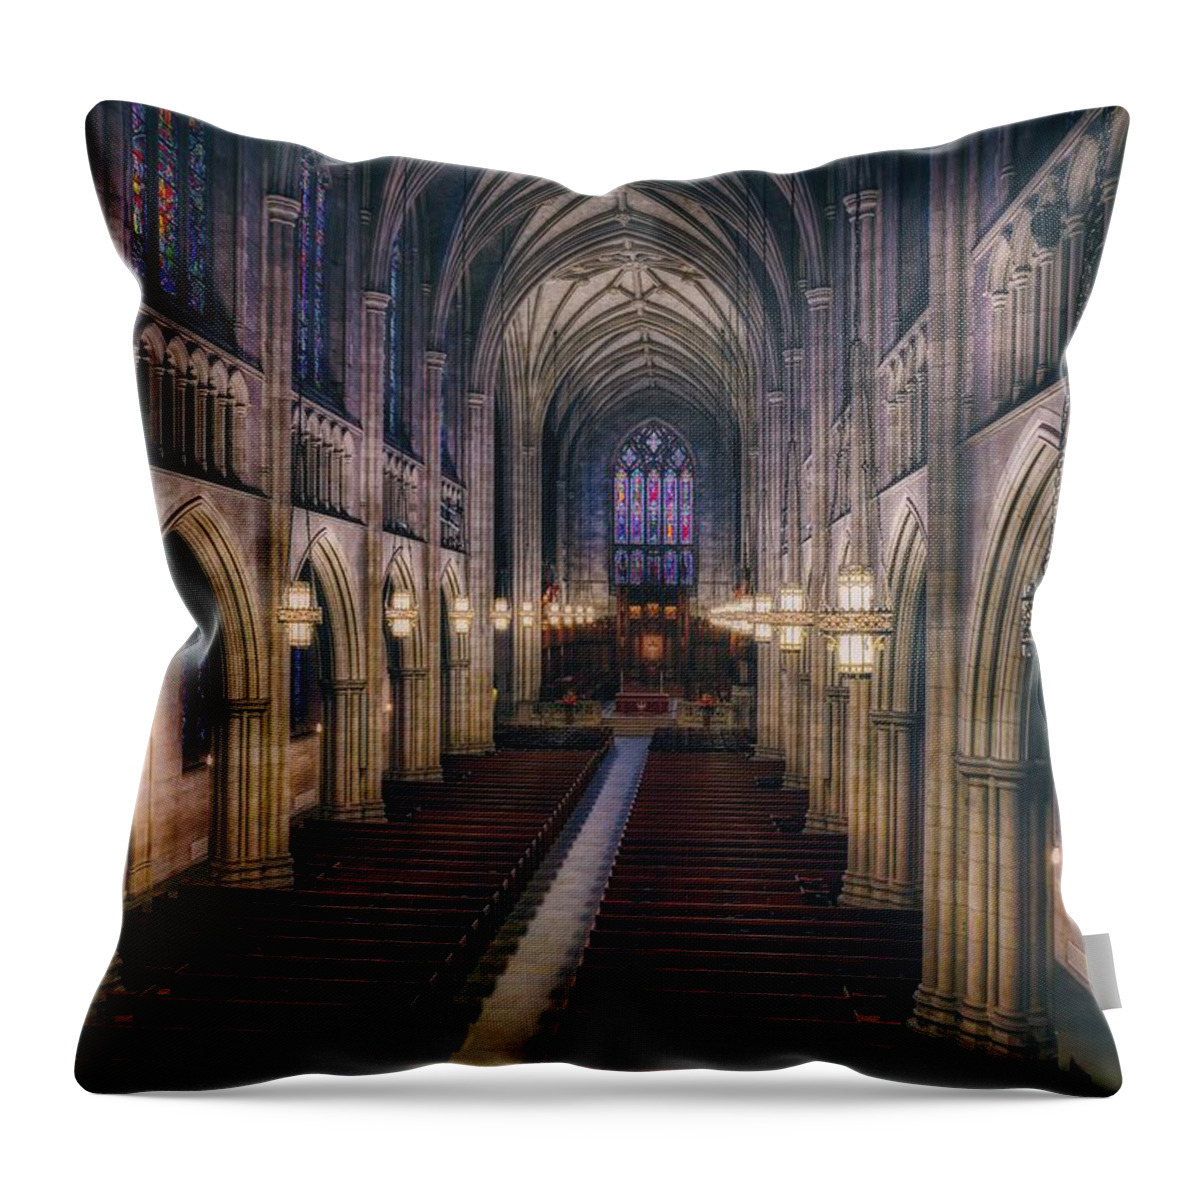 Duke University Throw Pillow featuring the photograph Duke University Chapel Interior by Mountain Dreams